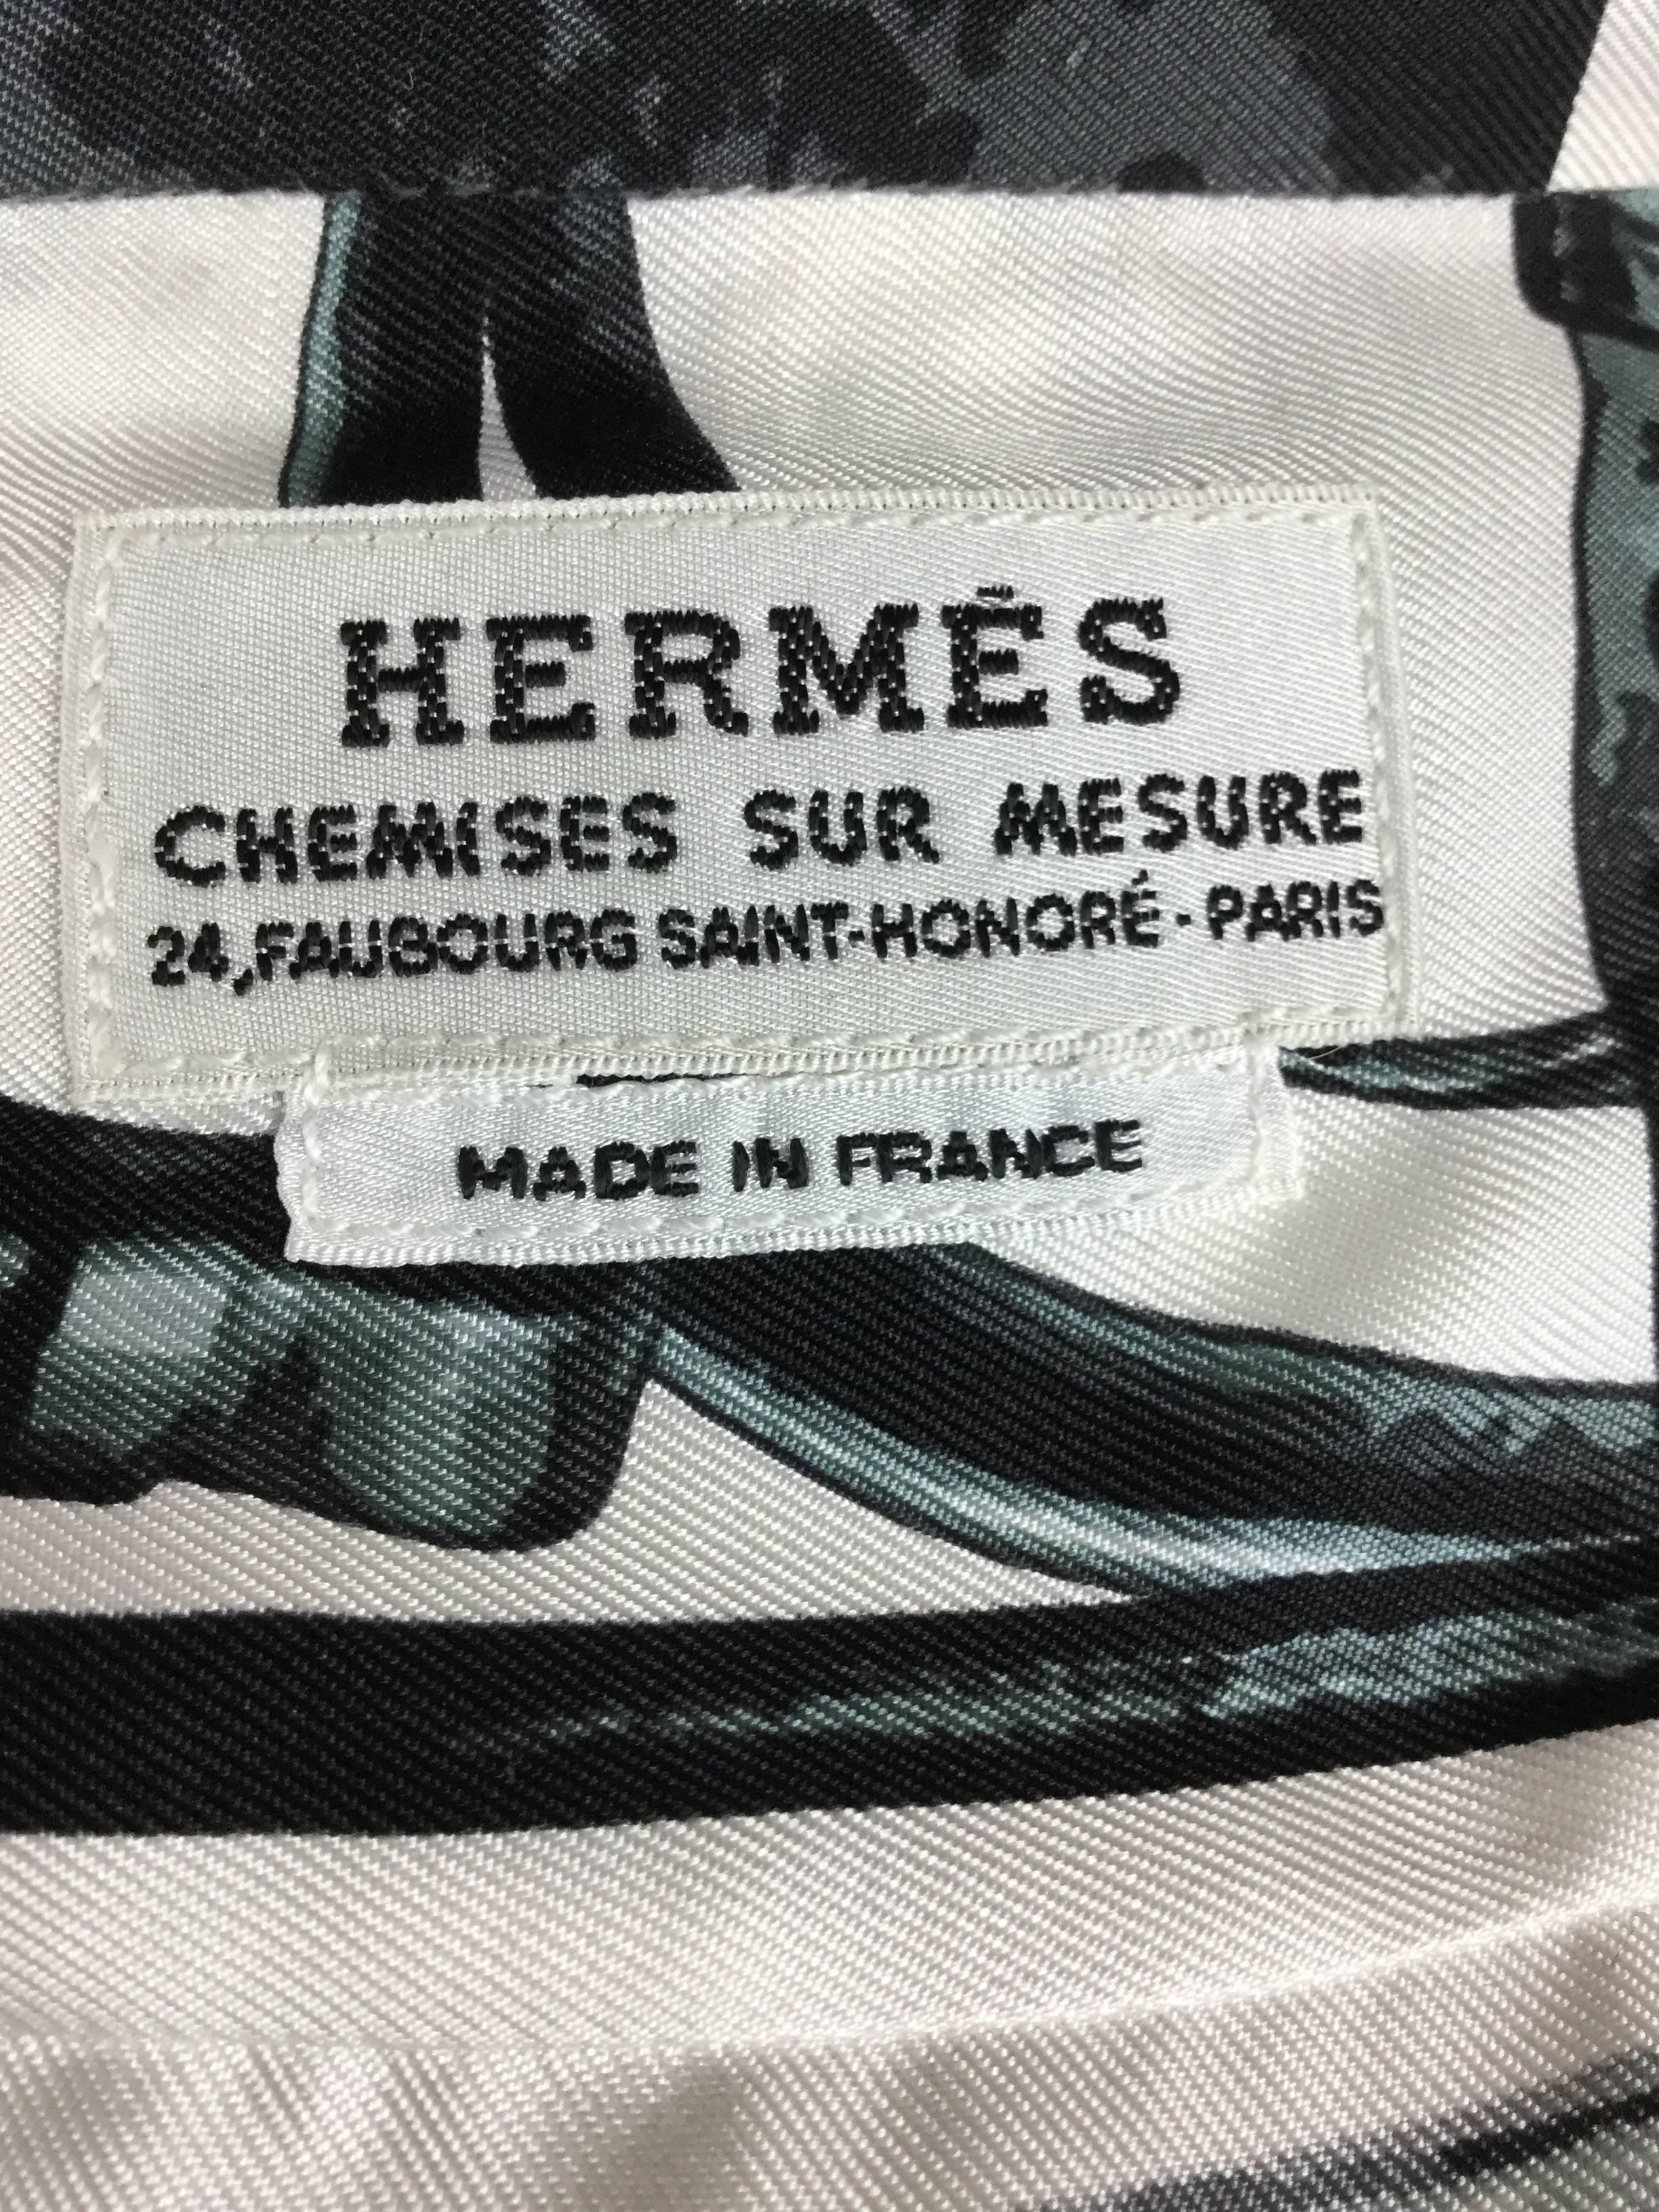 Outstanding Hermes Silk Blouse. Chemises Sur Mesure. 2